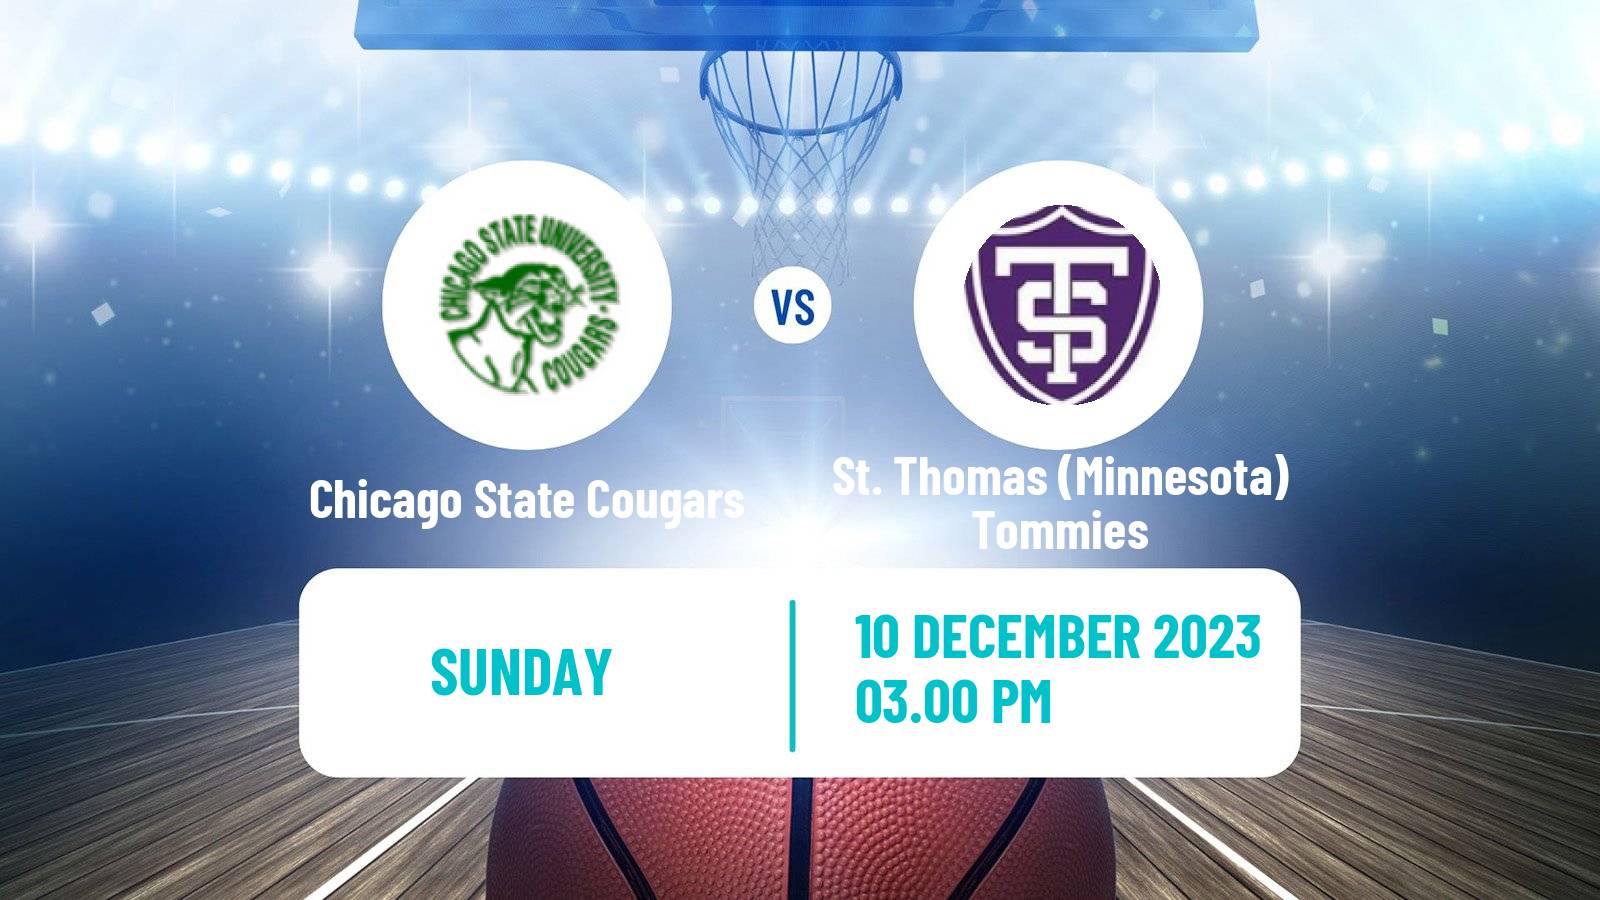 Basketball NCAA College Basketball Chicago State Cougars - St. Thomas (Minnesota) Tommies